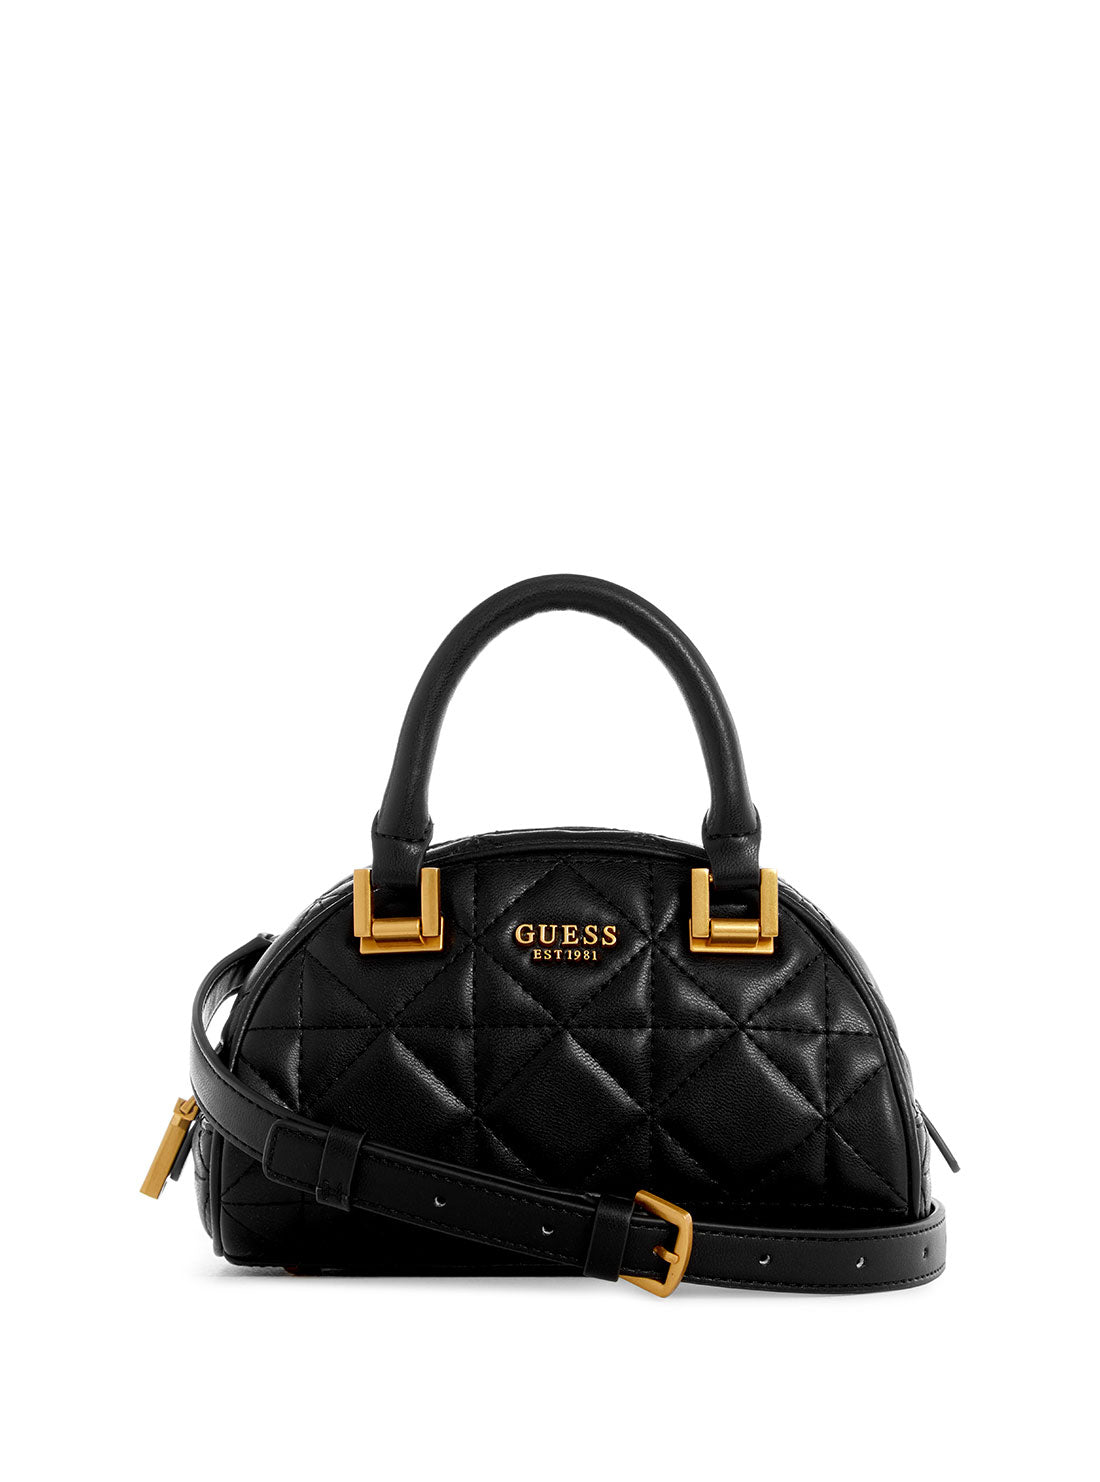 GUESS Women's Black Mildred Mini Bowler Bag QA896276 Front View